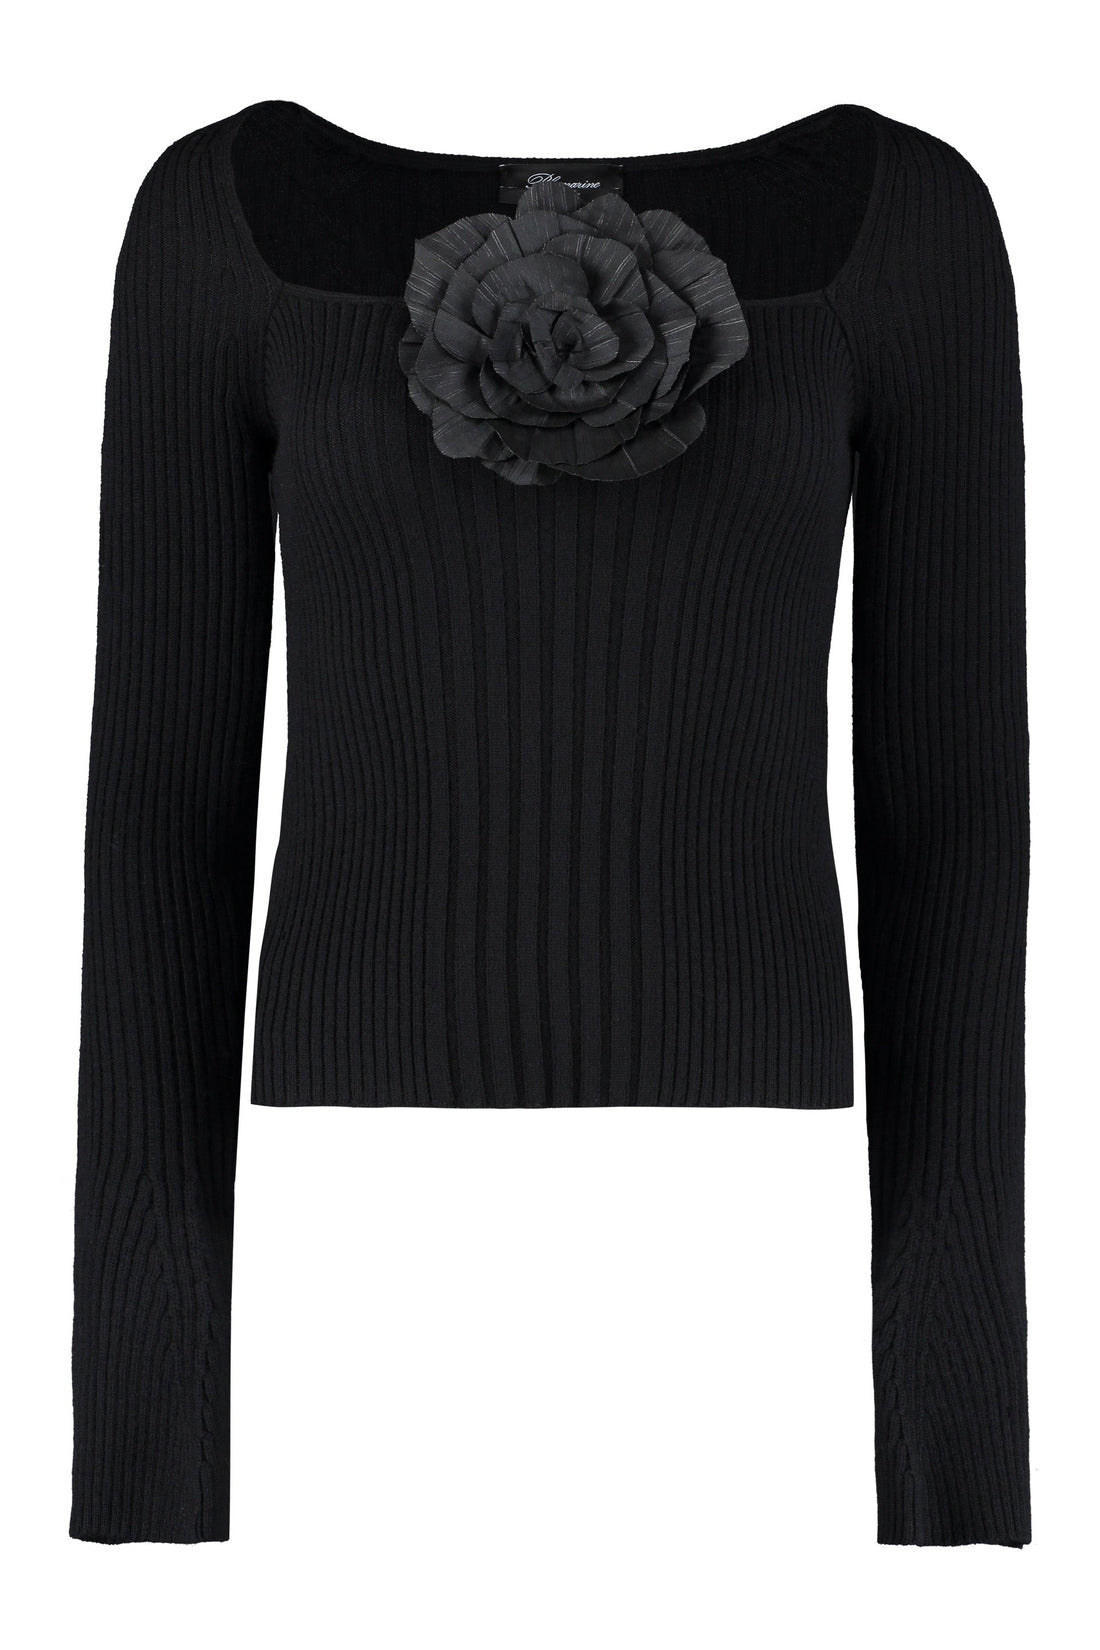 Blumarine-OUTLET-SALE-Long sleeve crew-neck sweater-ARCHIVIST